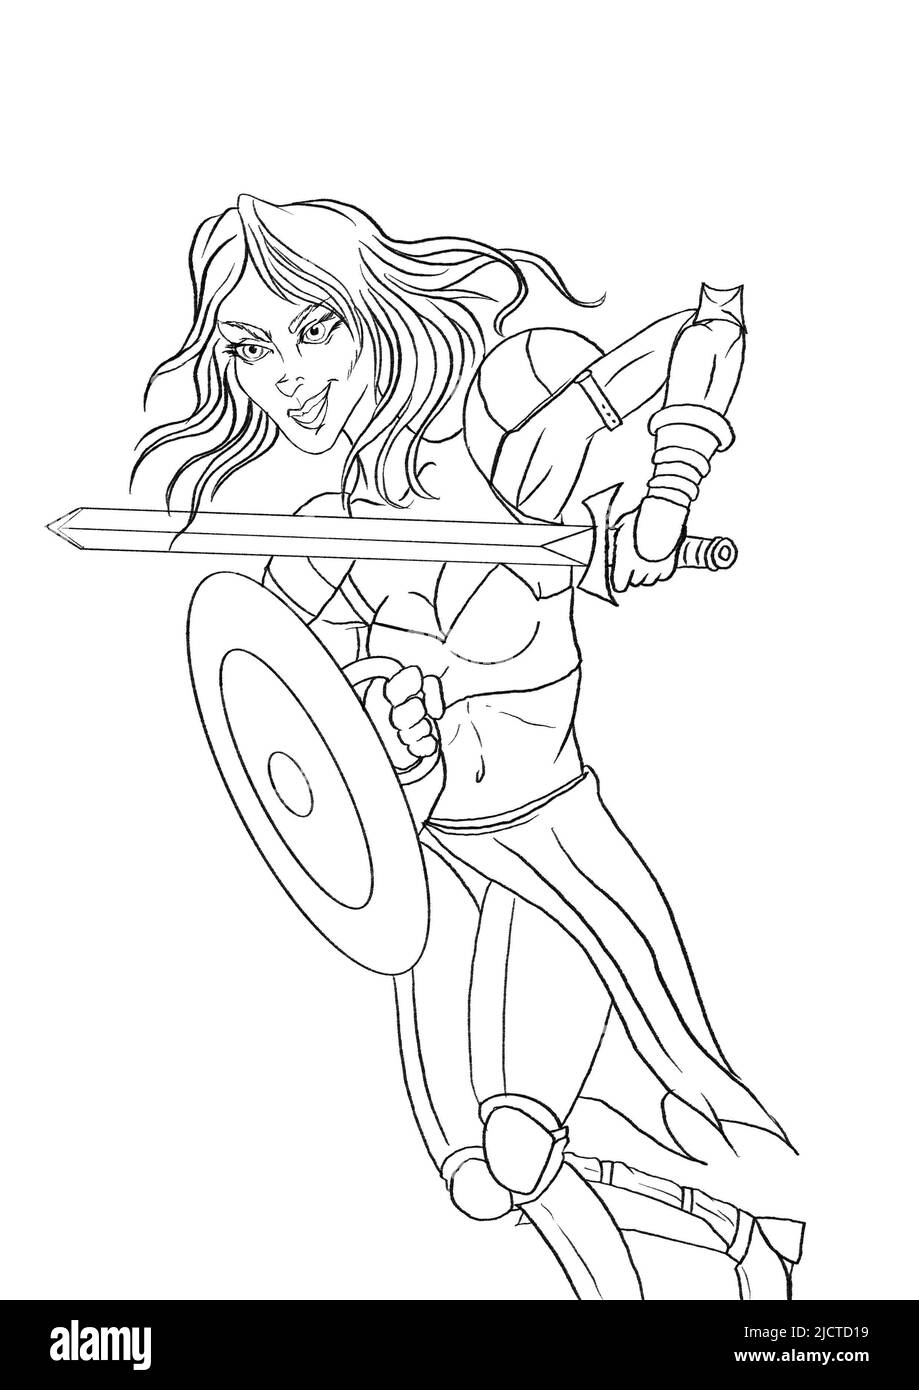 female warrior illustration role playing fantasy character art Stock Photo